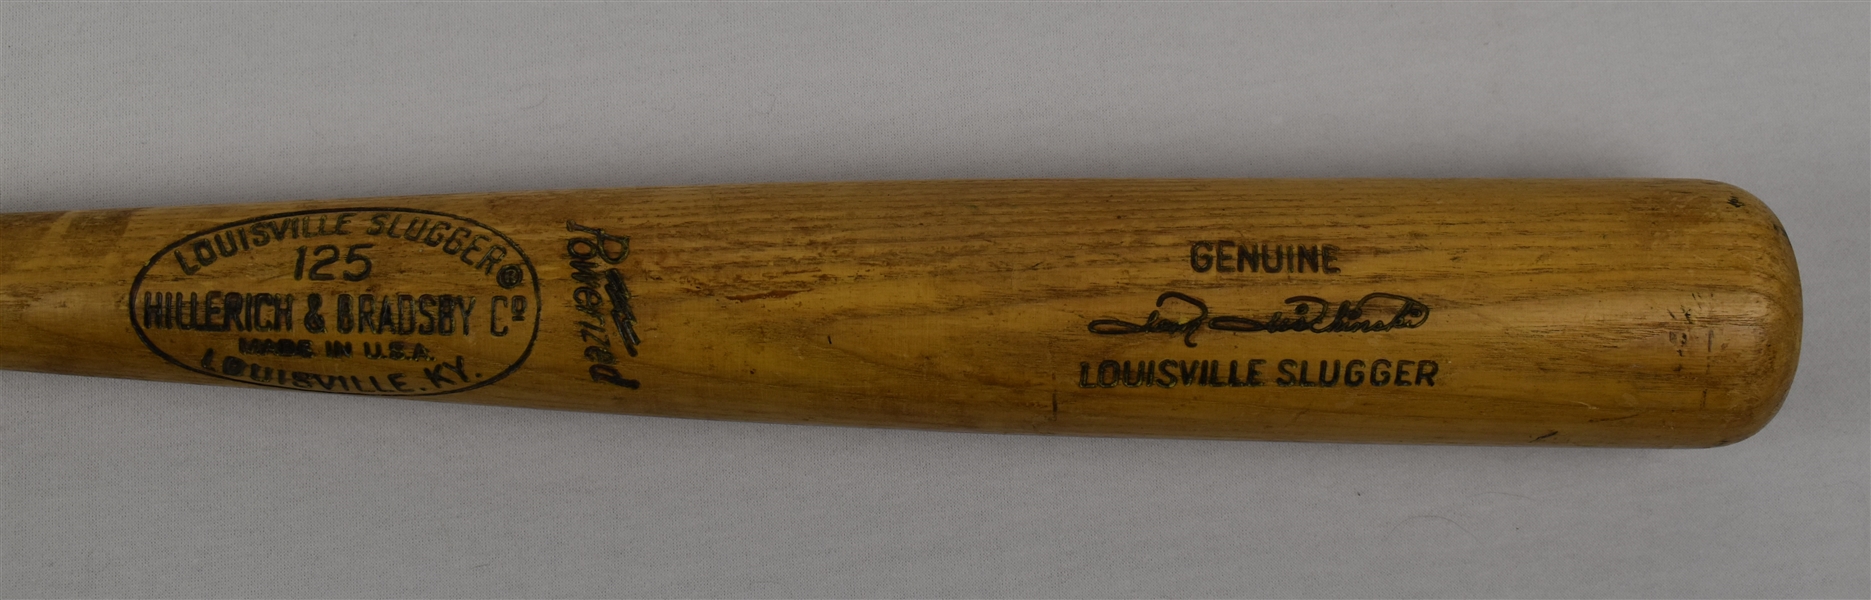 Tom Tischinski c. 1969-71 Minnesota Twins Game Used Bat